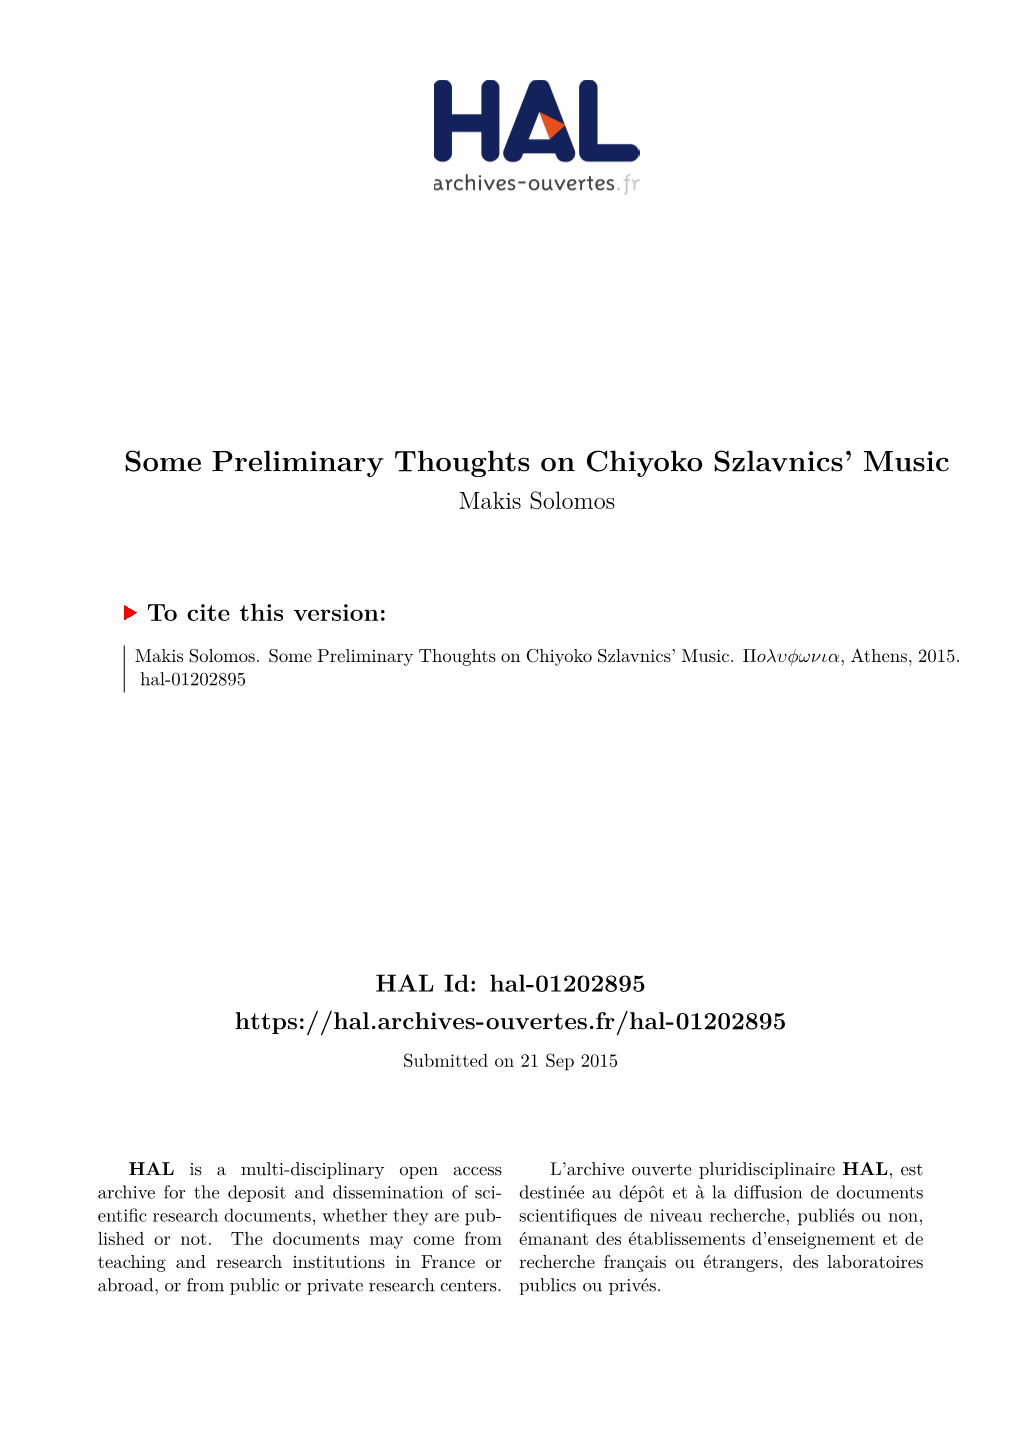 Some Preliminary Thoughts on Chiyoko Szlavnics' Music